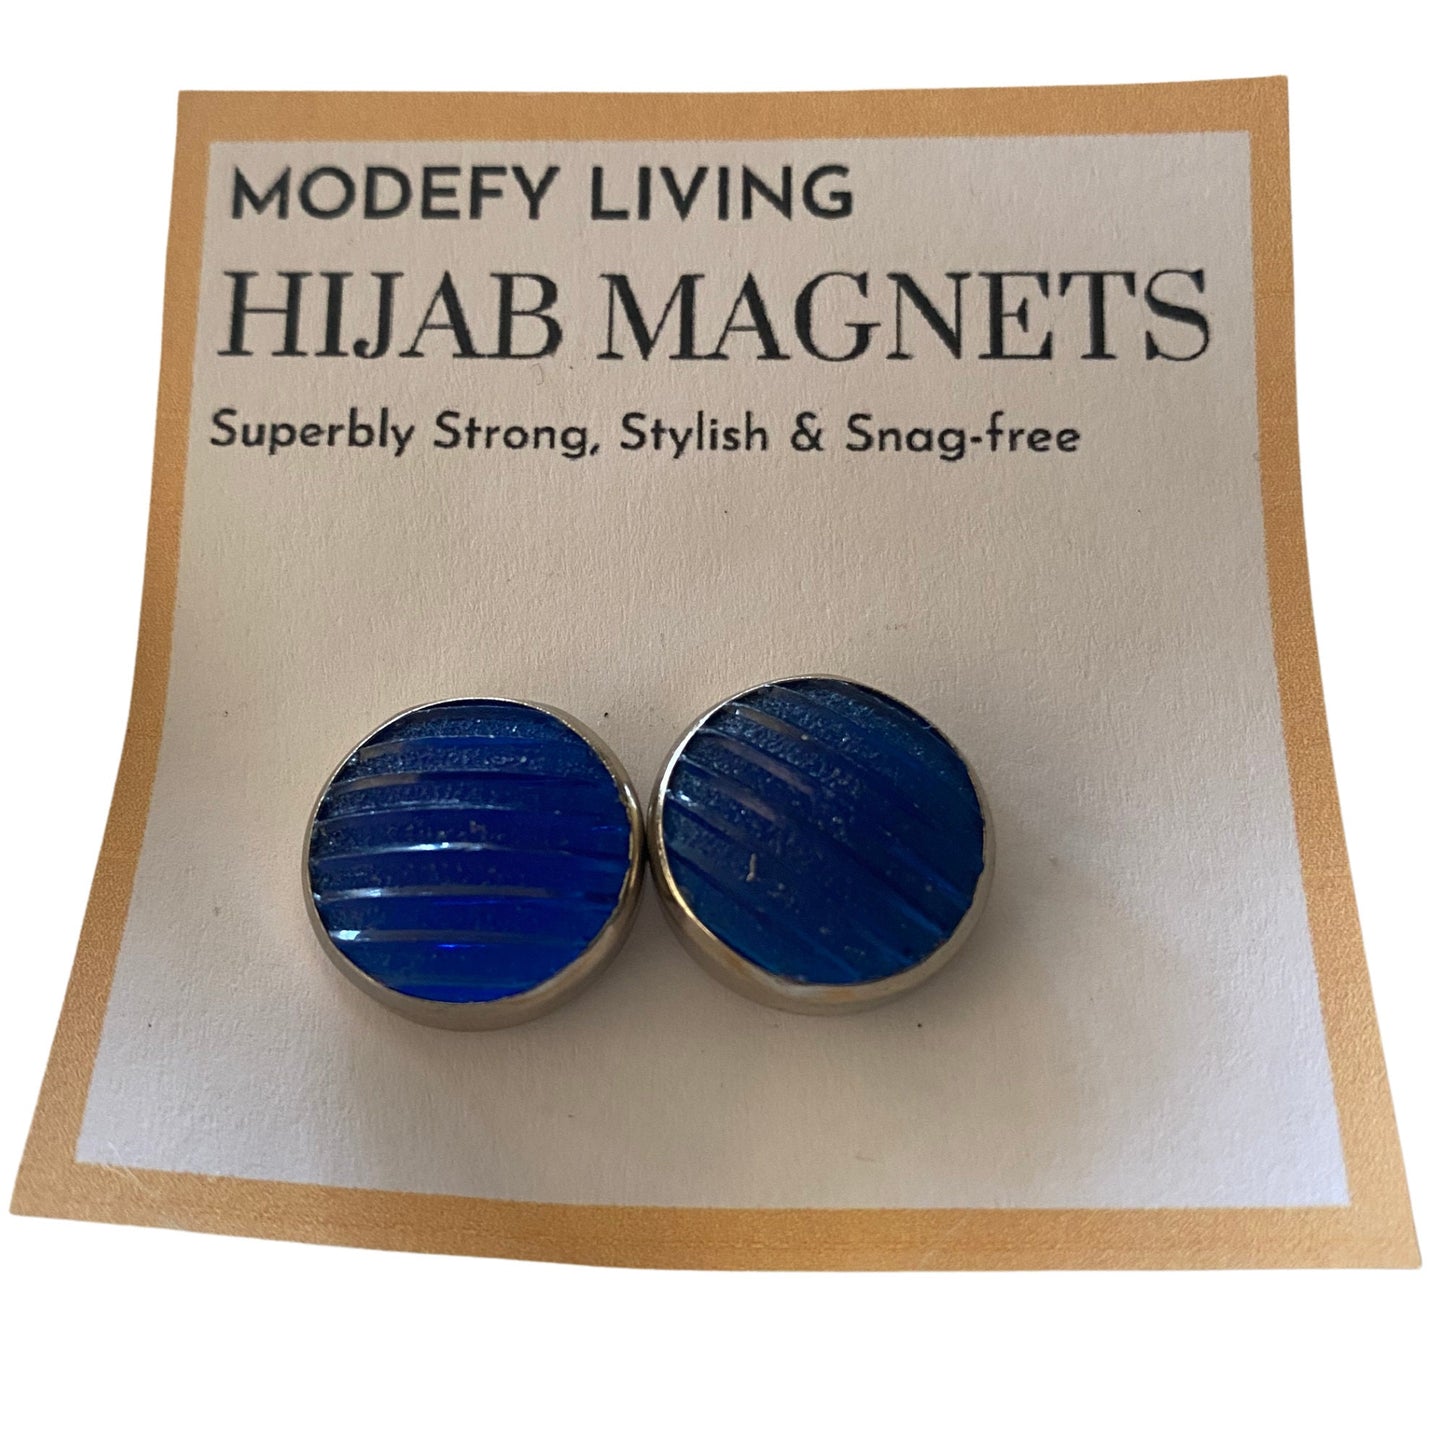 Hijab Magnets | Hijab Pins| Hijab Closure | Jeweled Scarf Accessories |Keep Shirts Closed Magnets | Retro Scarf Style | Cardigan Closure